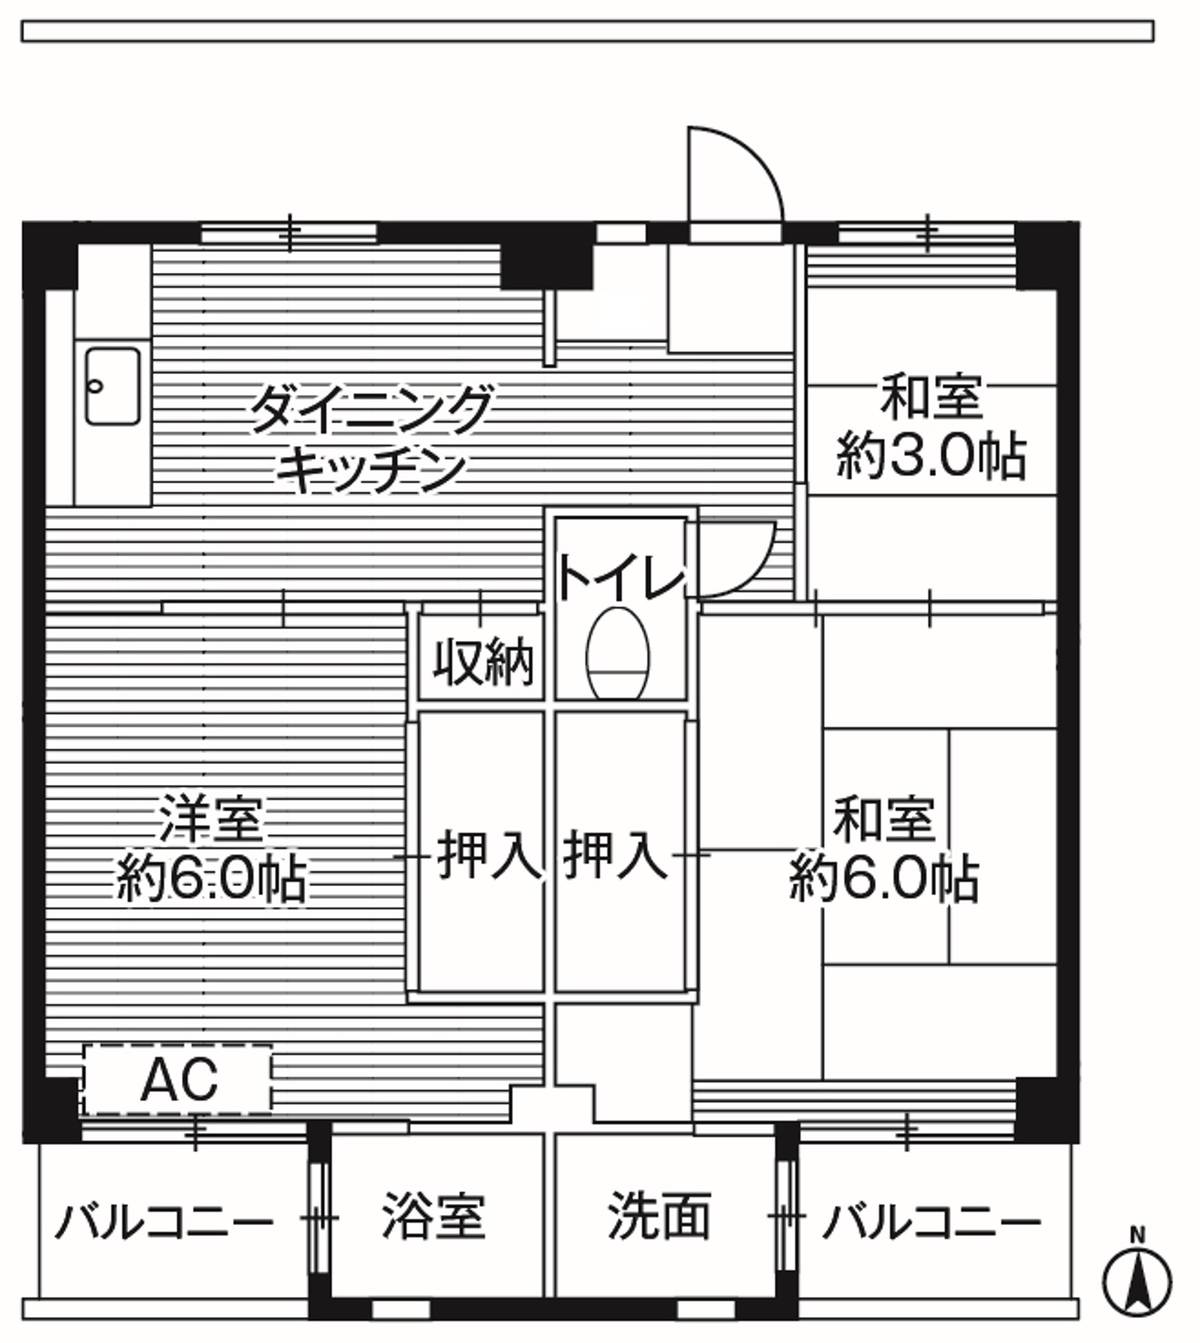 3DK floorplan of Village House Kameda in Koriyama-shi